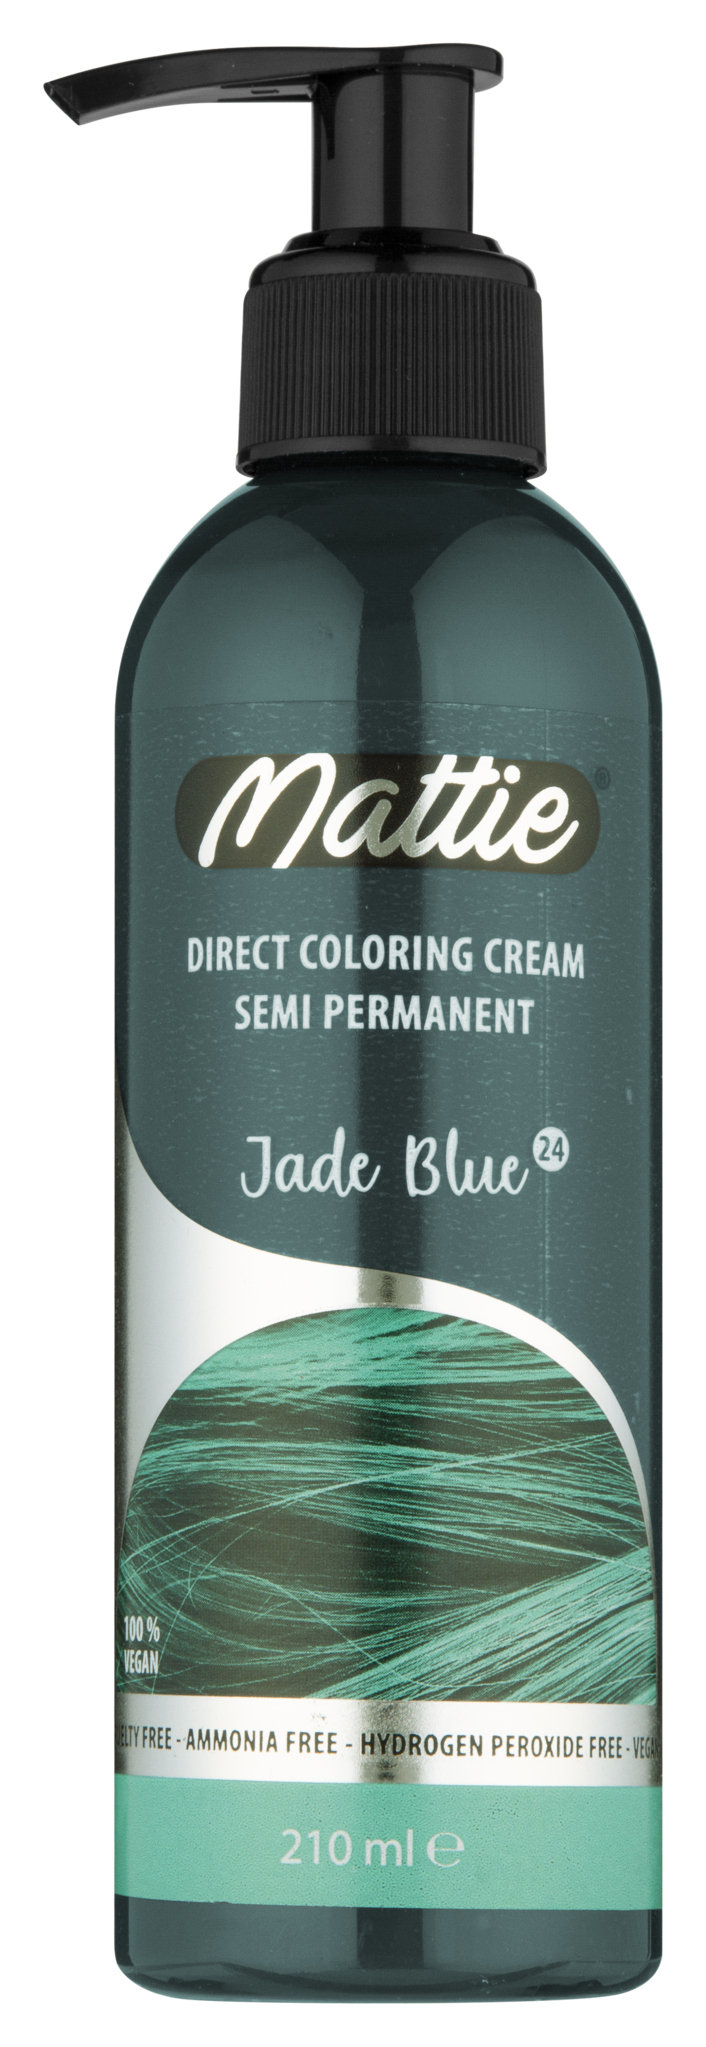 Mattie Direct Coloring Cream Semi-Permanent - Jade Blue 210ml